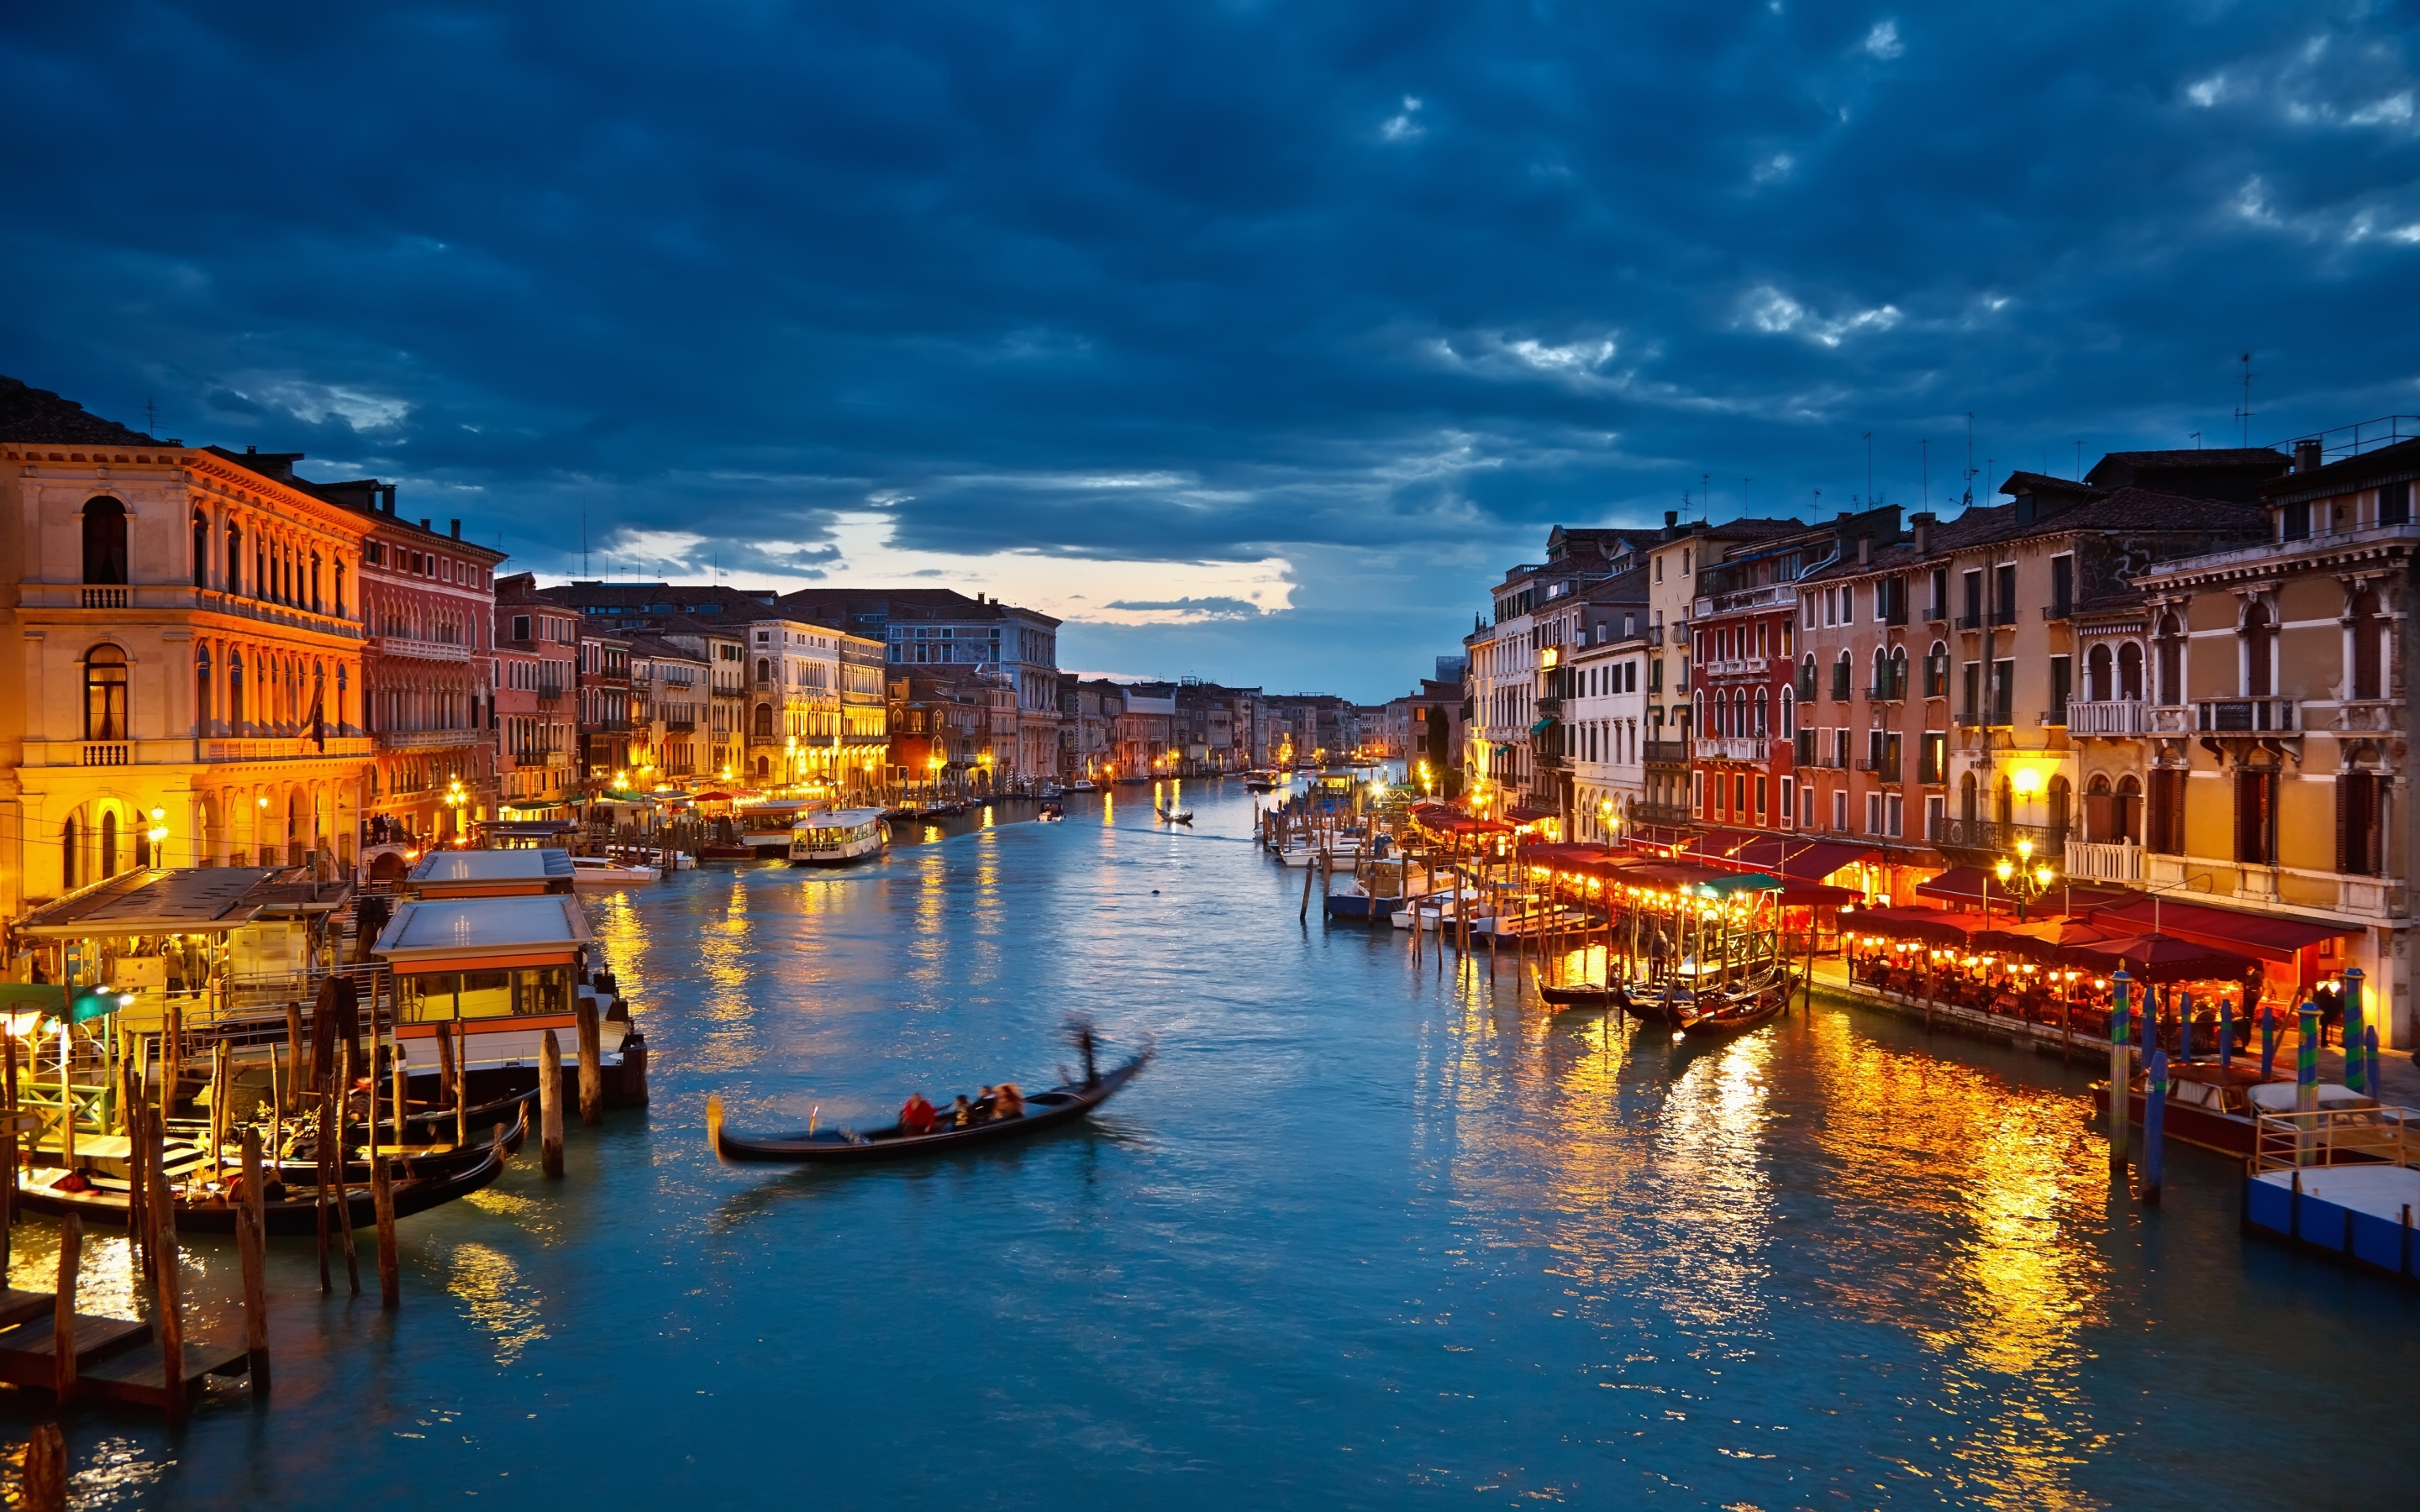 Venice Italy for 2880 x 1800 Retina Display resolution